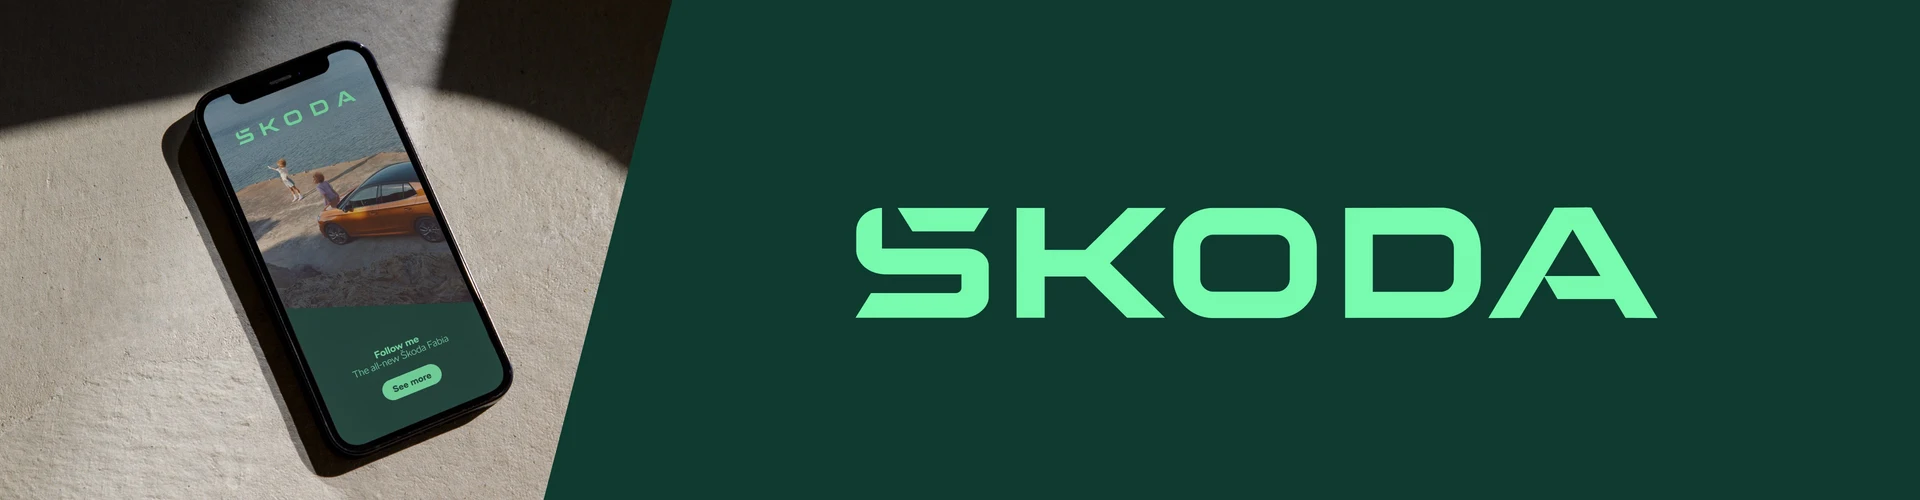 Skoda logo brand car symbol with name white design